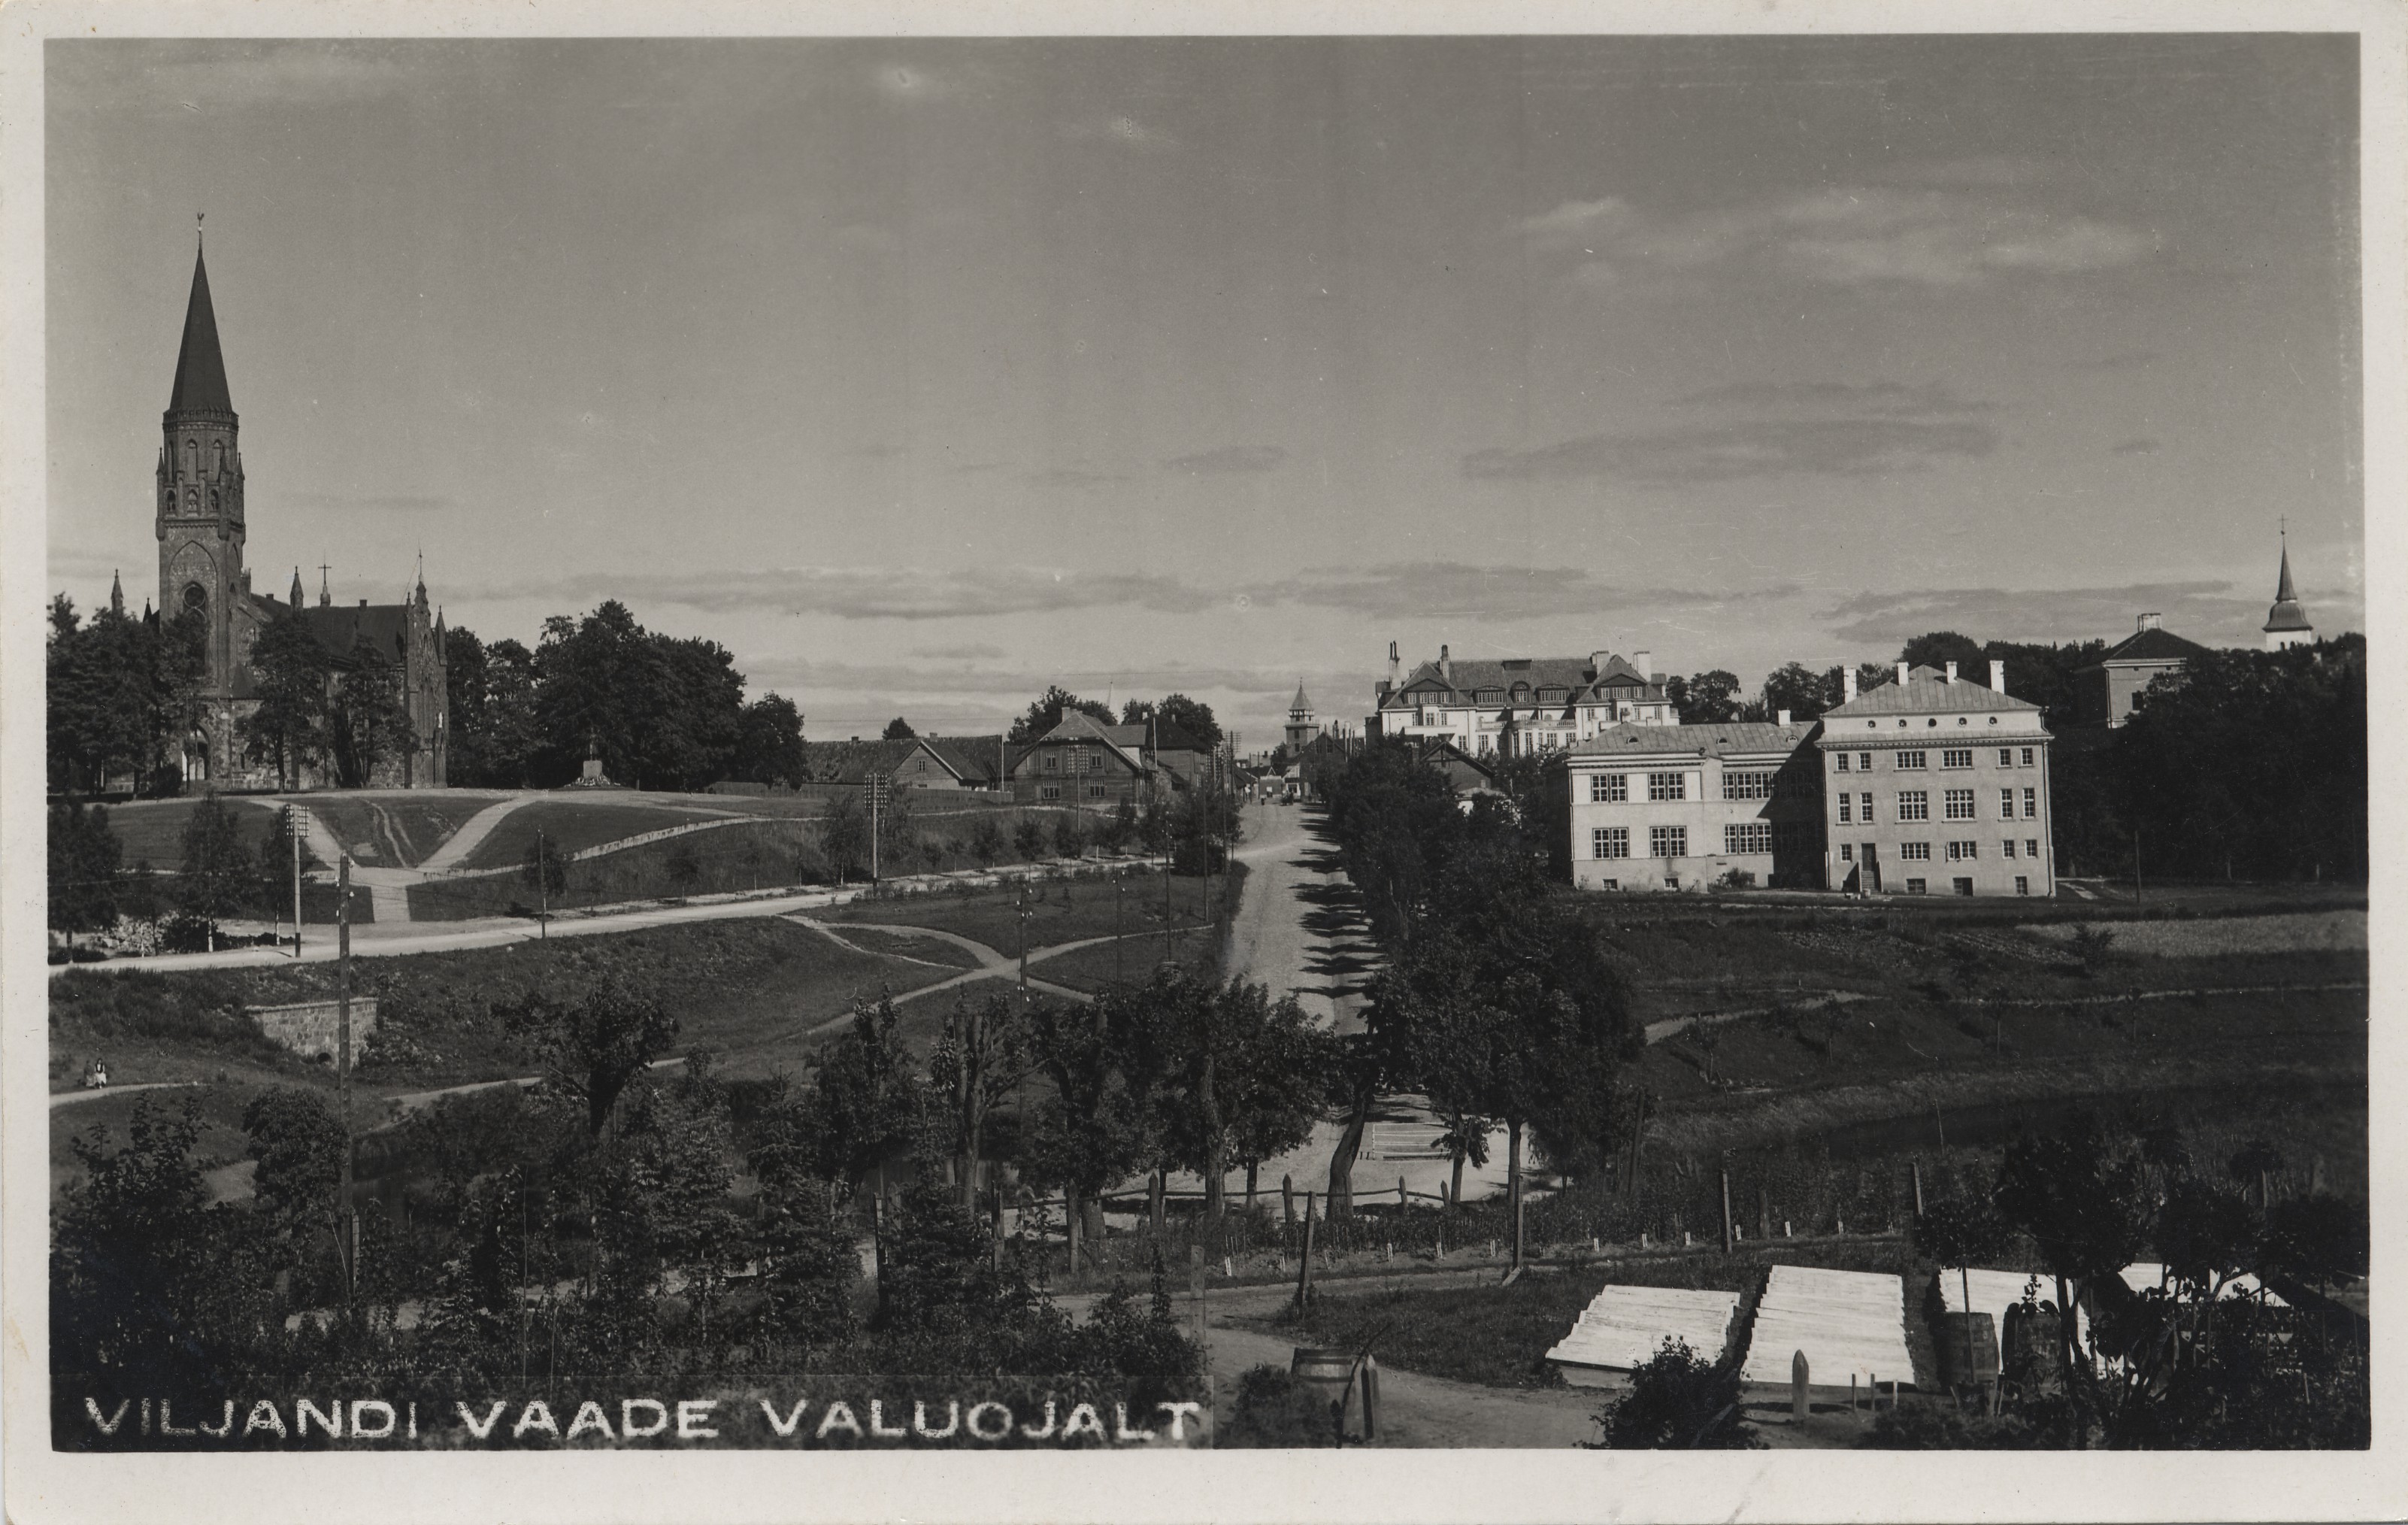 Viljandi view from the Creator